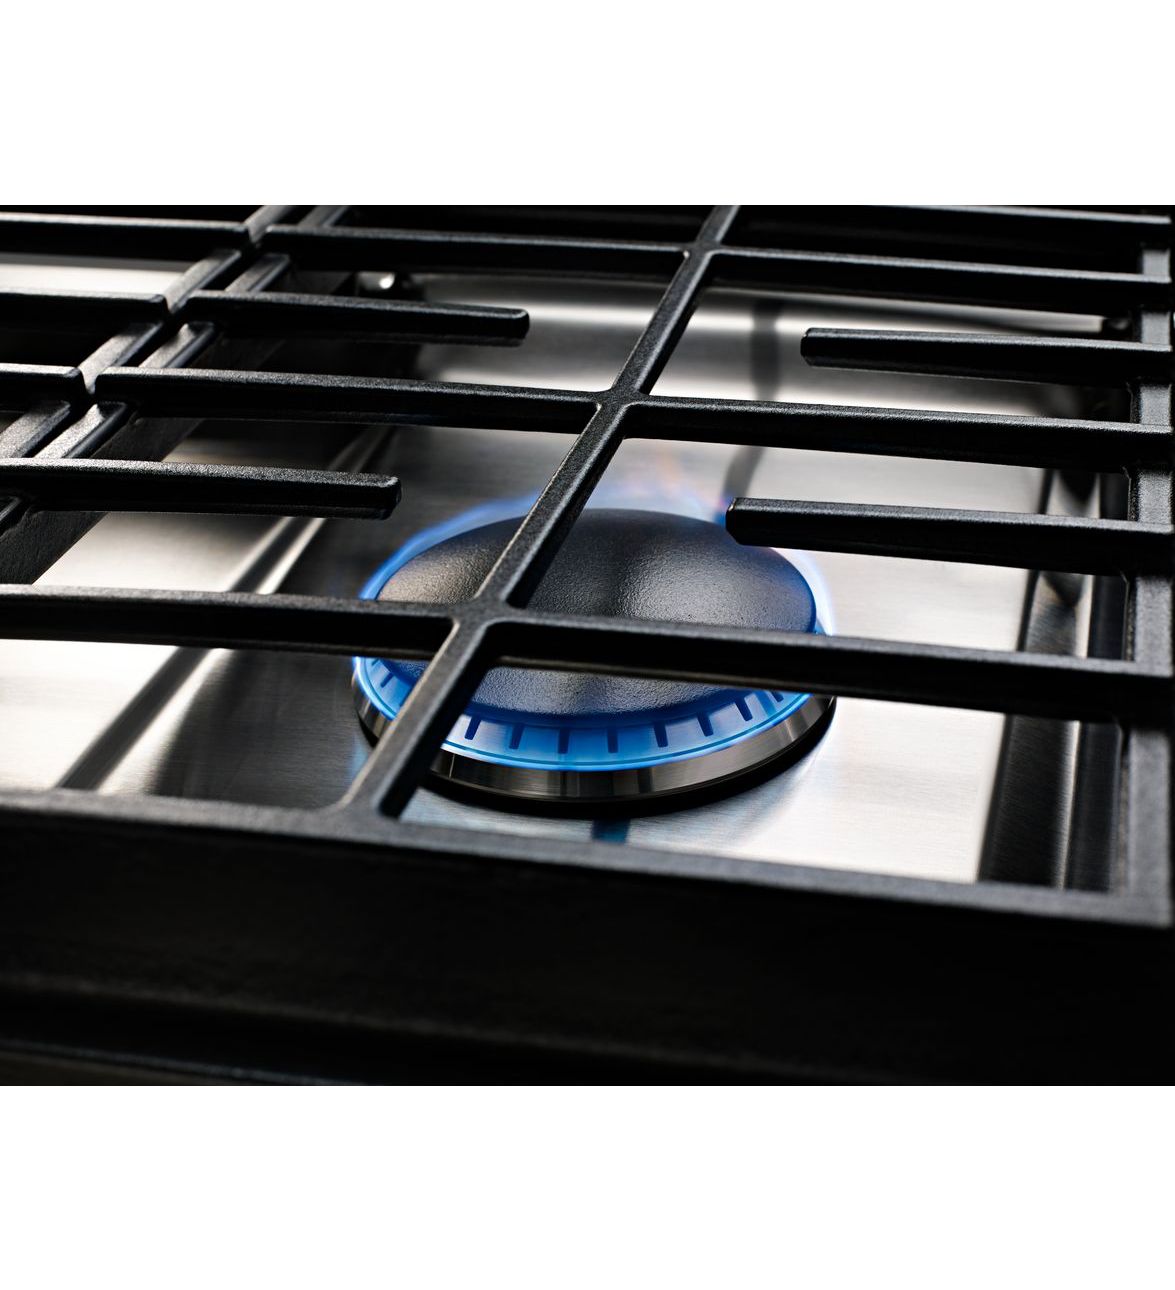 30" KitchenAid 5-Burner Gas Cooktop - KCGS350ESS